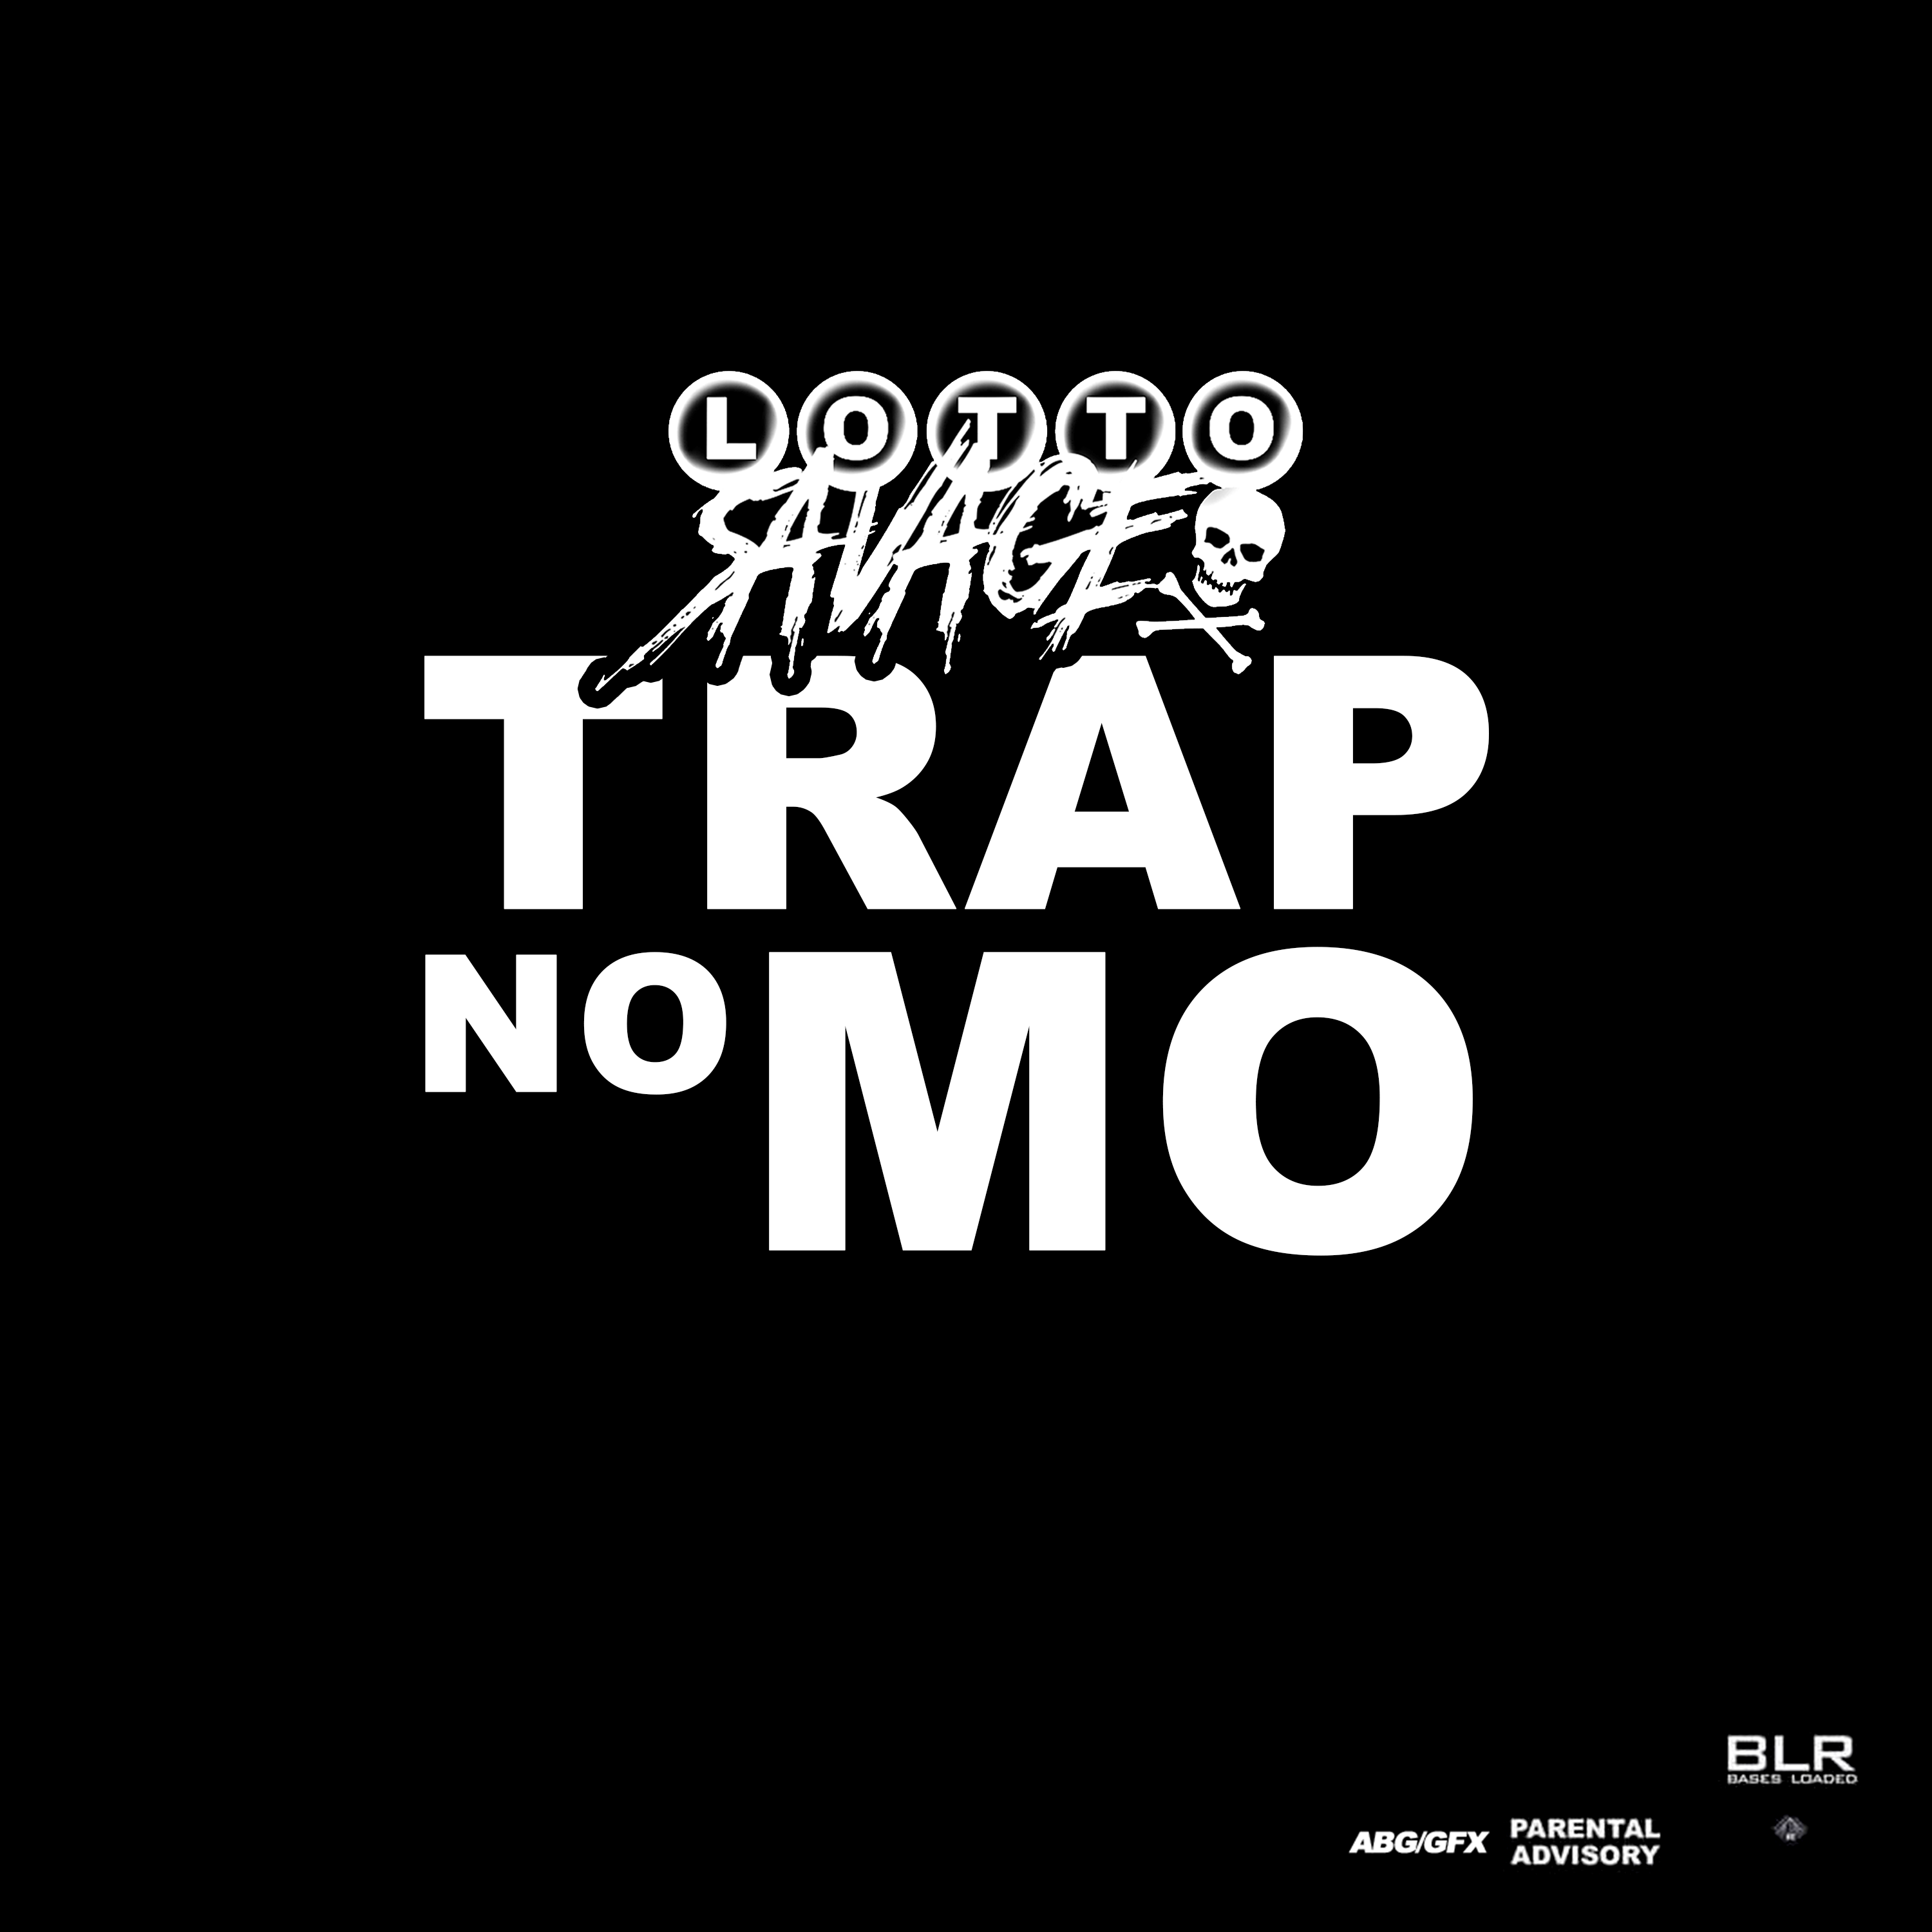 [Single] Lotto Savage – Trap No Mo @lottosavage21